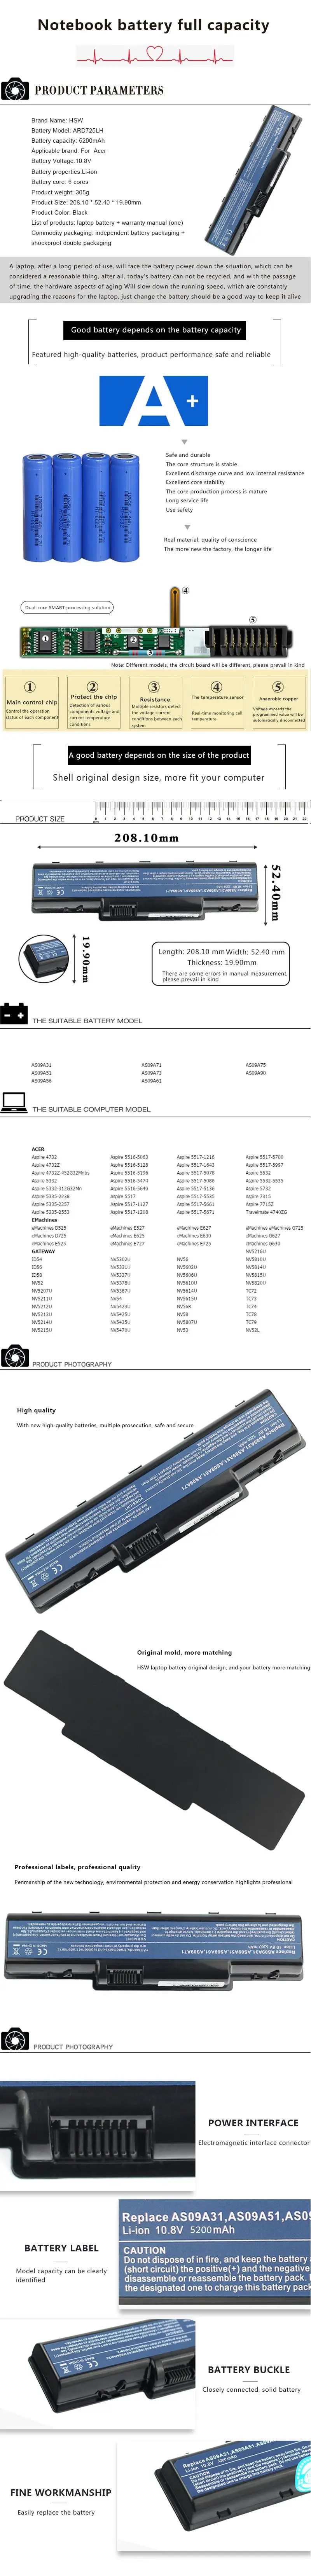 HSW 5200 мАч ноутбука Батарея для EMACHINES E525 E627 E725 D525 D725 D620 NV52 NV5207U NV5211U NV5815U NV5212U NV5213U акумуляторная батарея